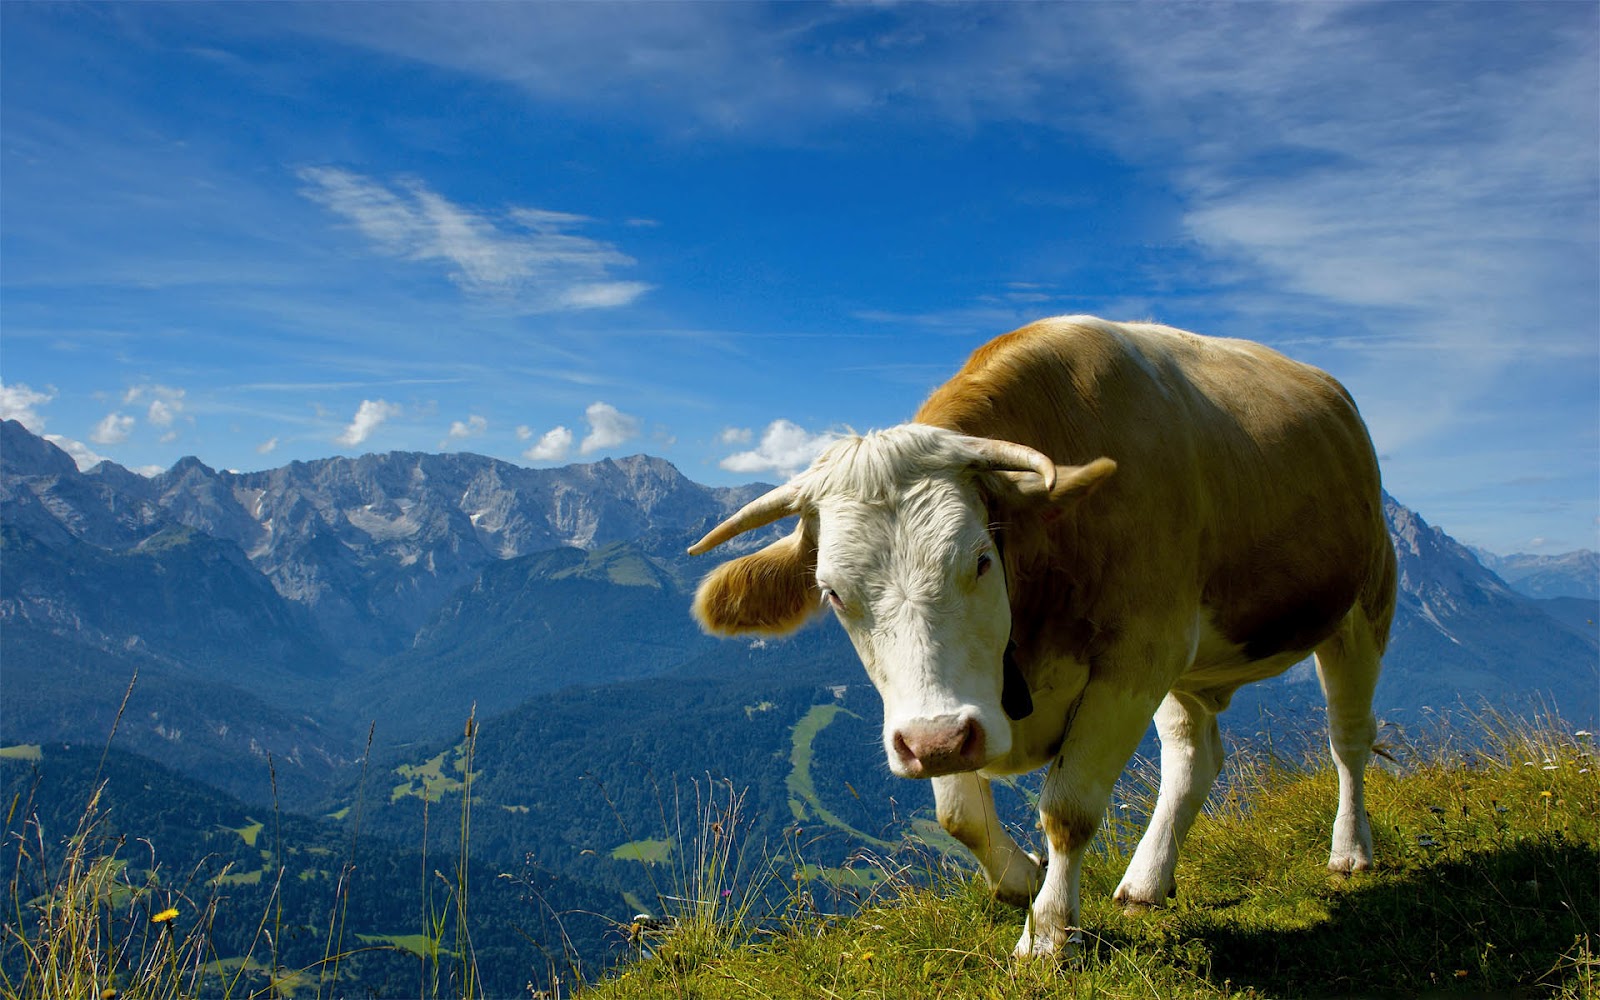 http://3.bp.blogspot.com/-onZuMmegR1o/UCQT6eEZitI/AAAAAAAAAM8/MLTkcCtAPA8/s1600/hd-cow-wallpaper-with-a-cow-in-the-mountains-cow-background-picture.jpg